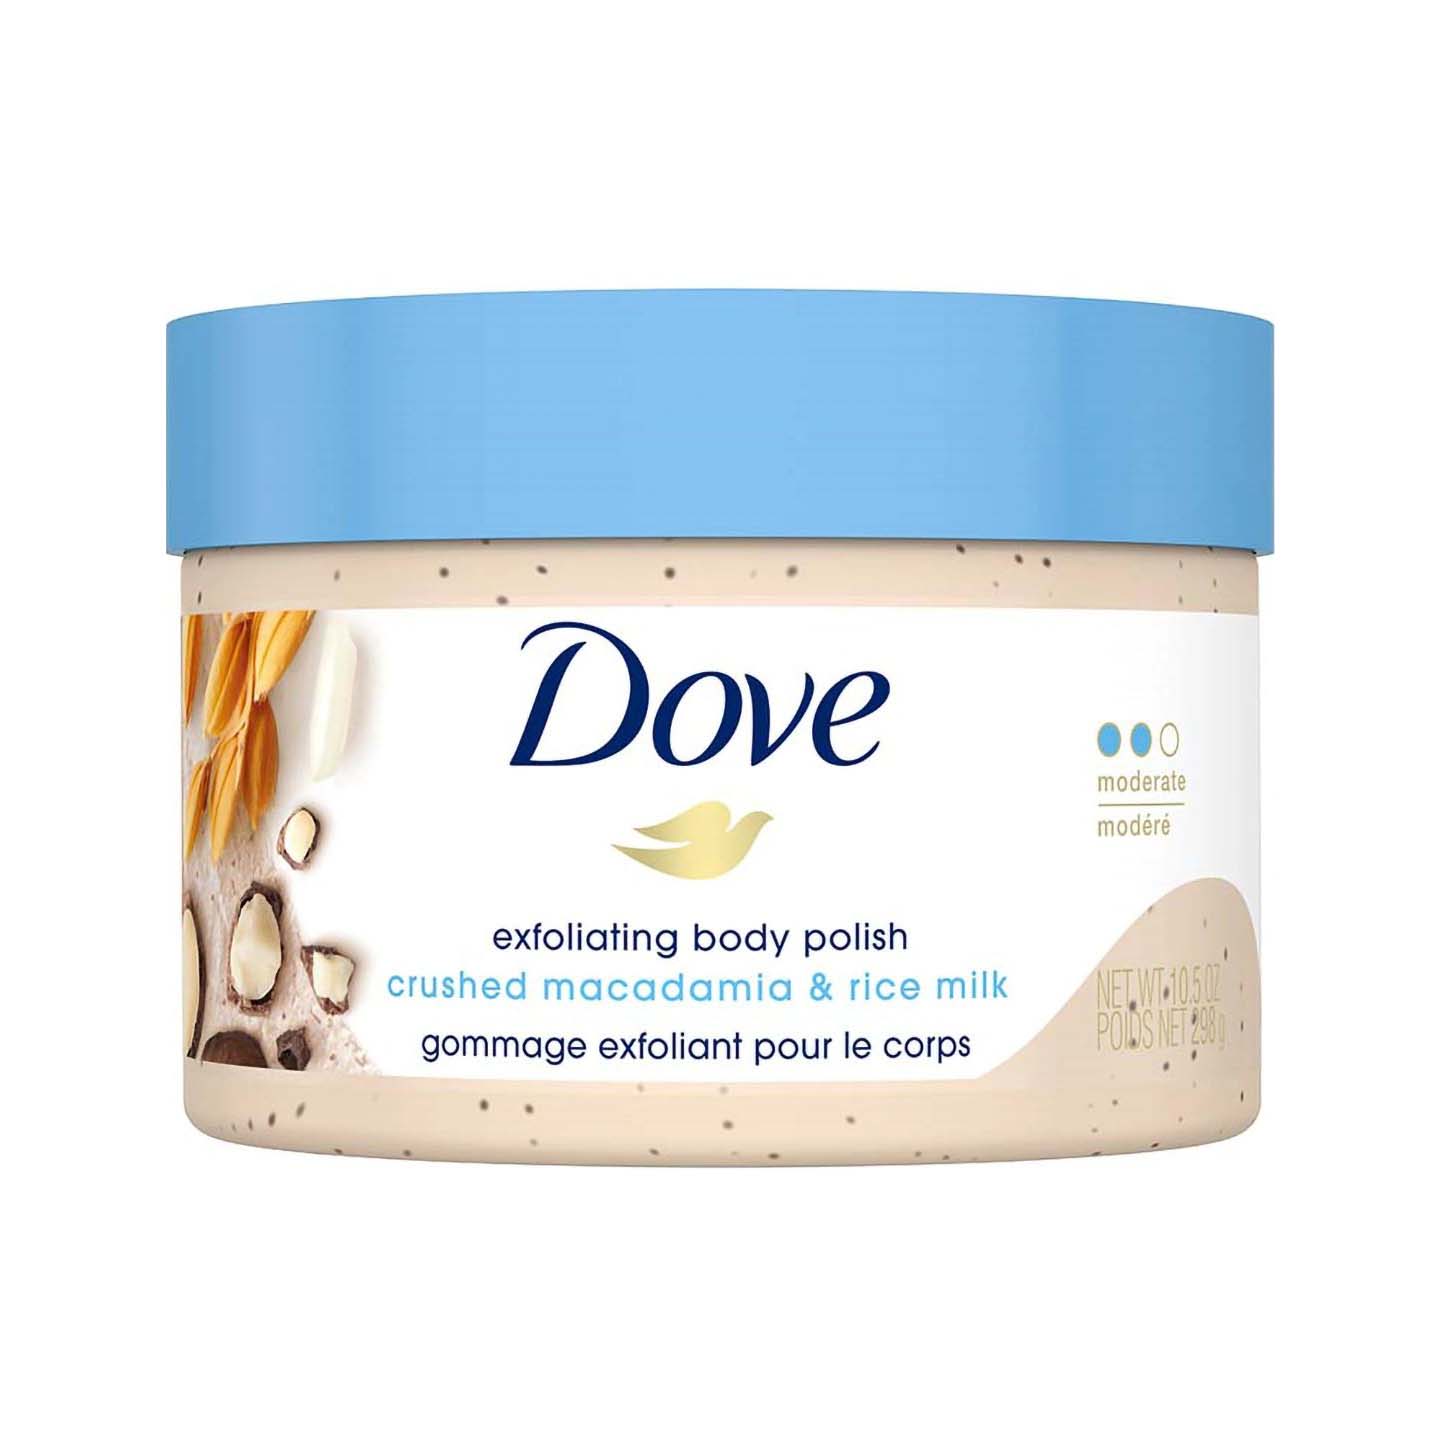 Dove Exfoliating Body Polish 298gm – Crushed Macadamia & Rice Milk - Bloom Pharmacy